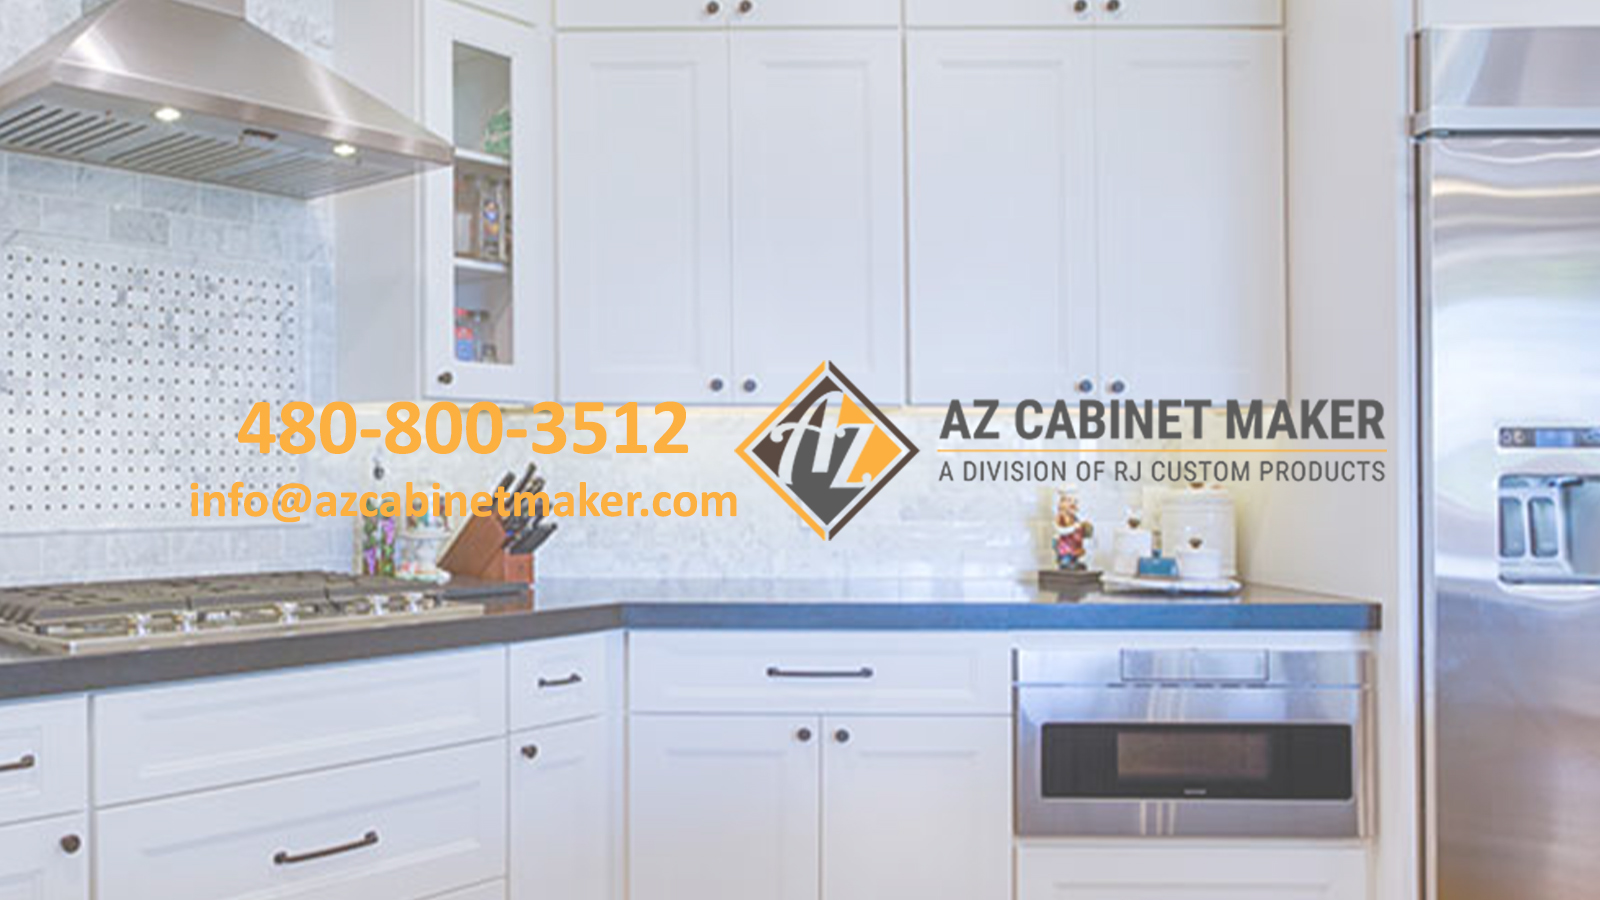 az-cabinet-maker-google-cover-image-custom-cabinets